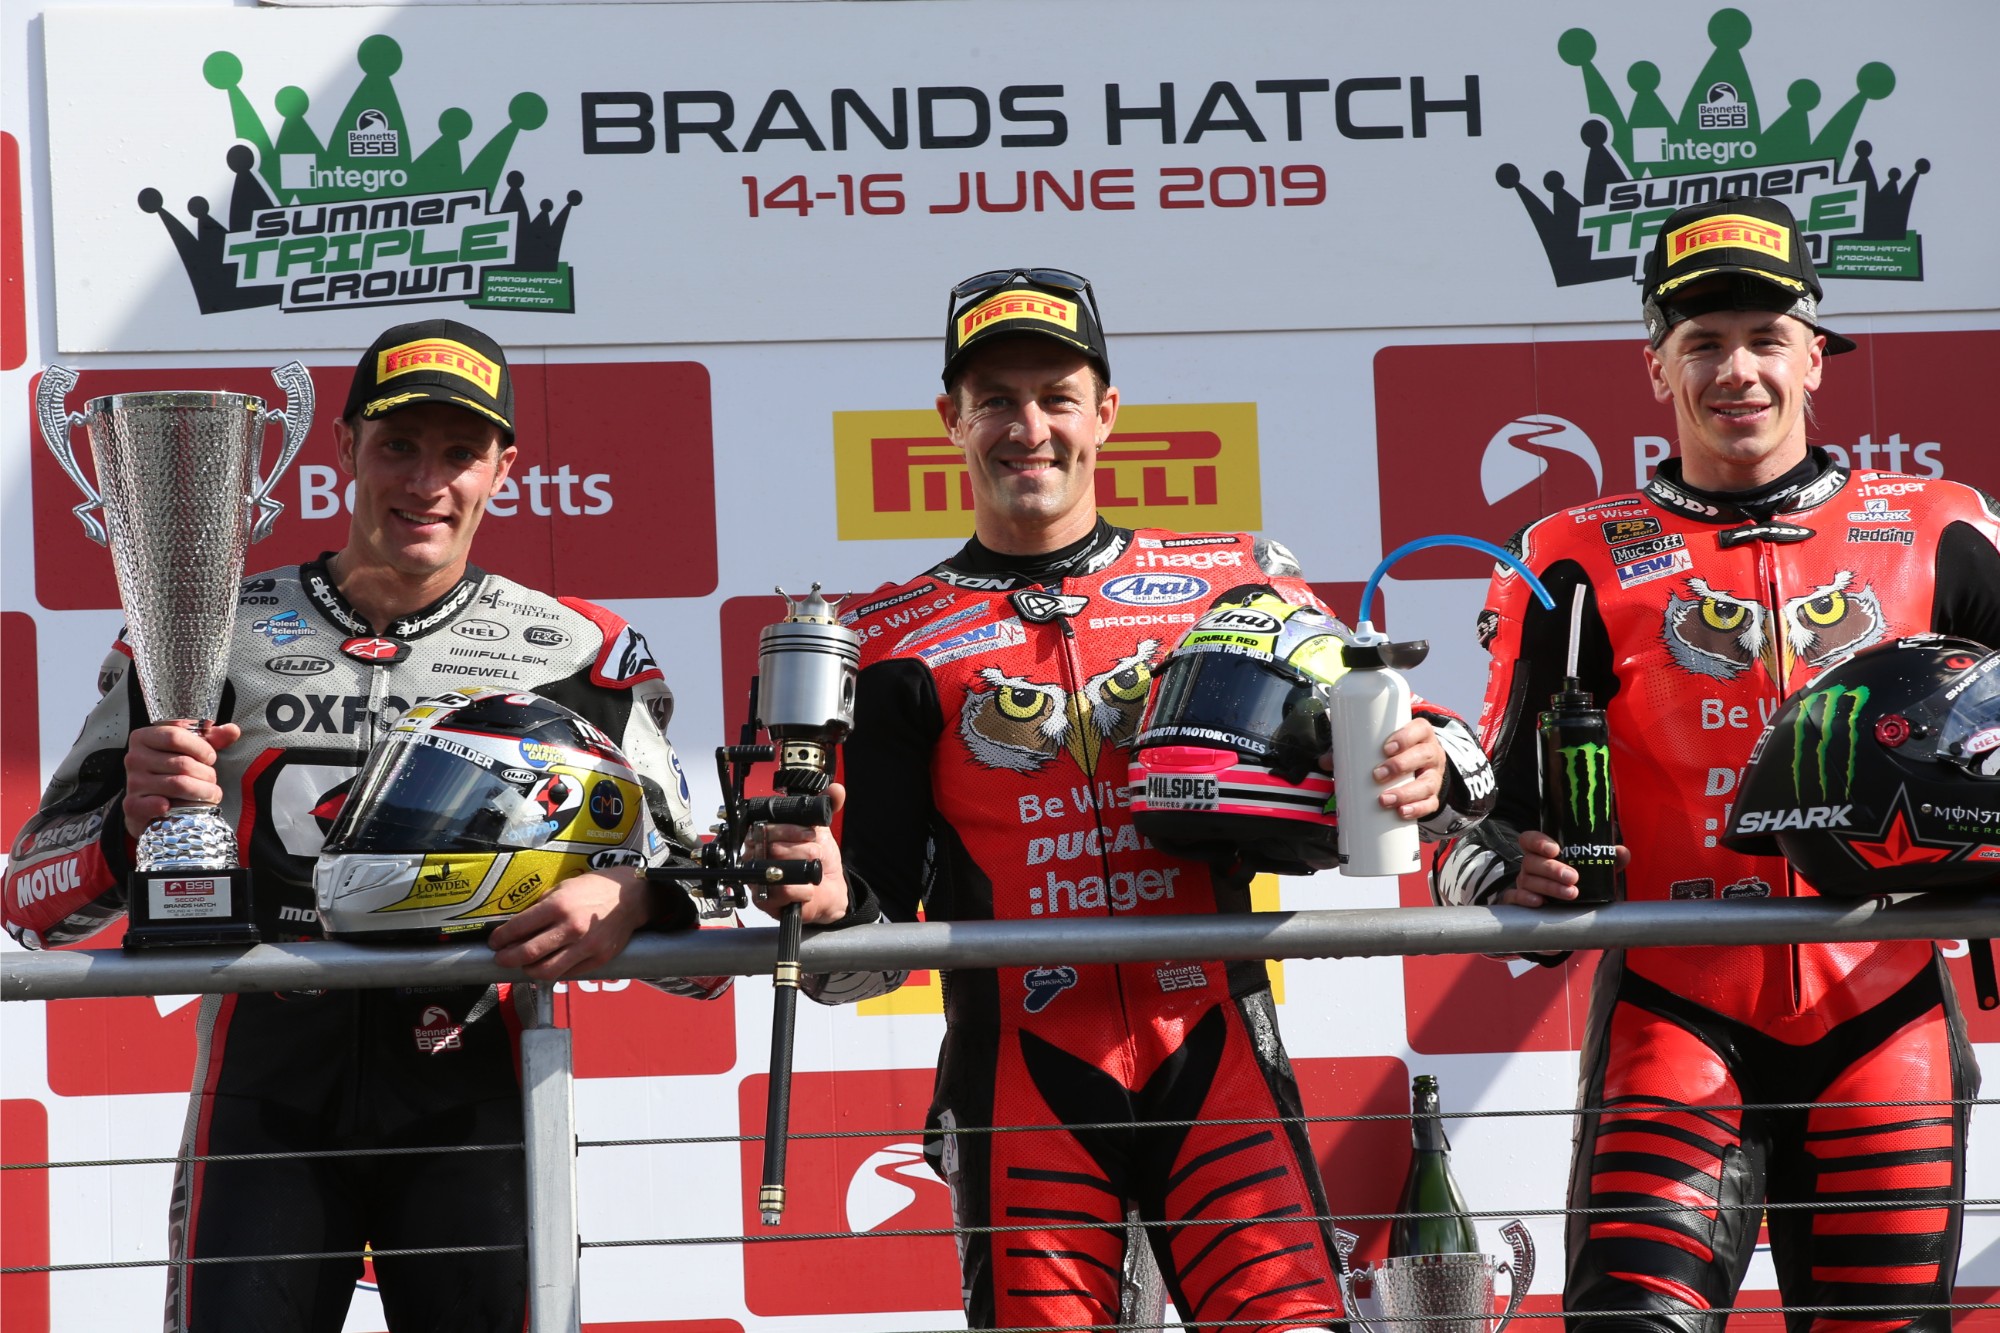 British Superbike Josh Brookes Wins Both Races At Brands Hatch Roadracing World Magazine